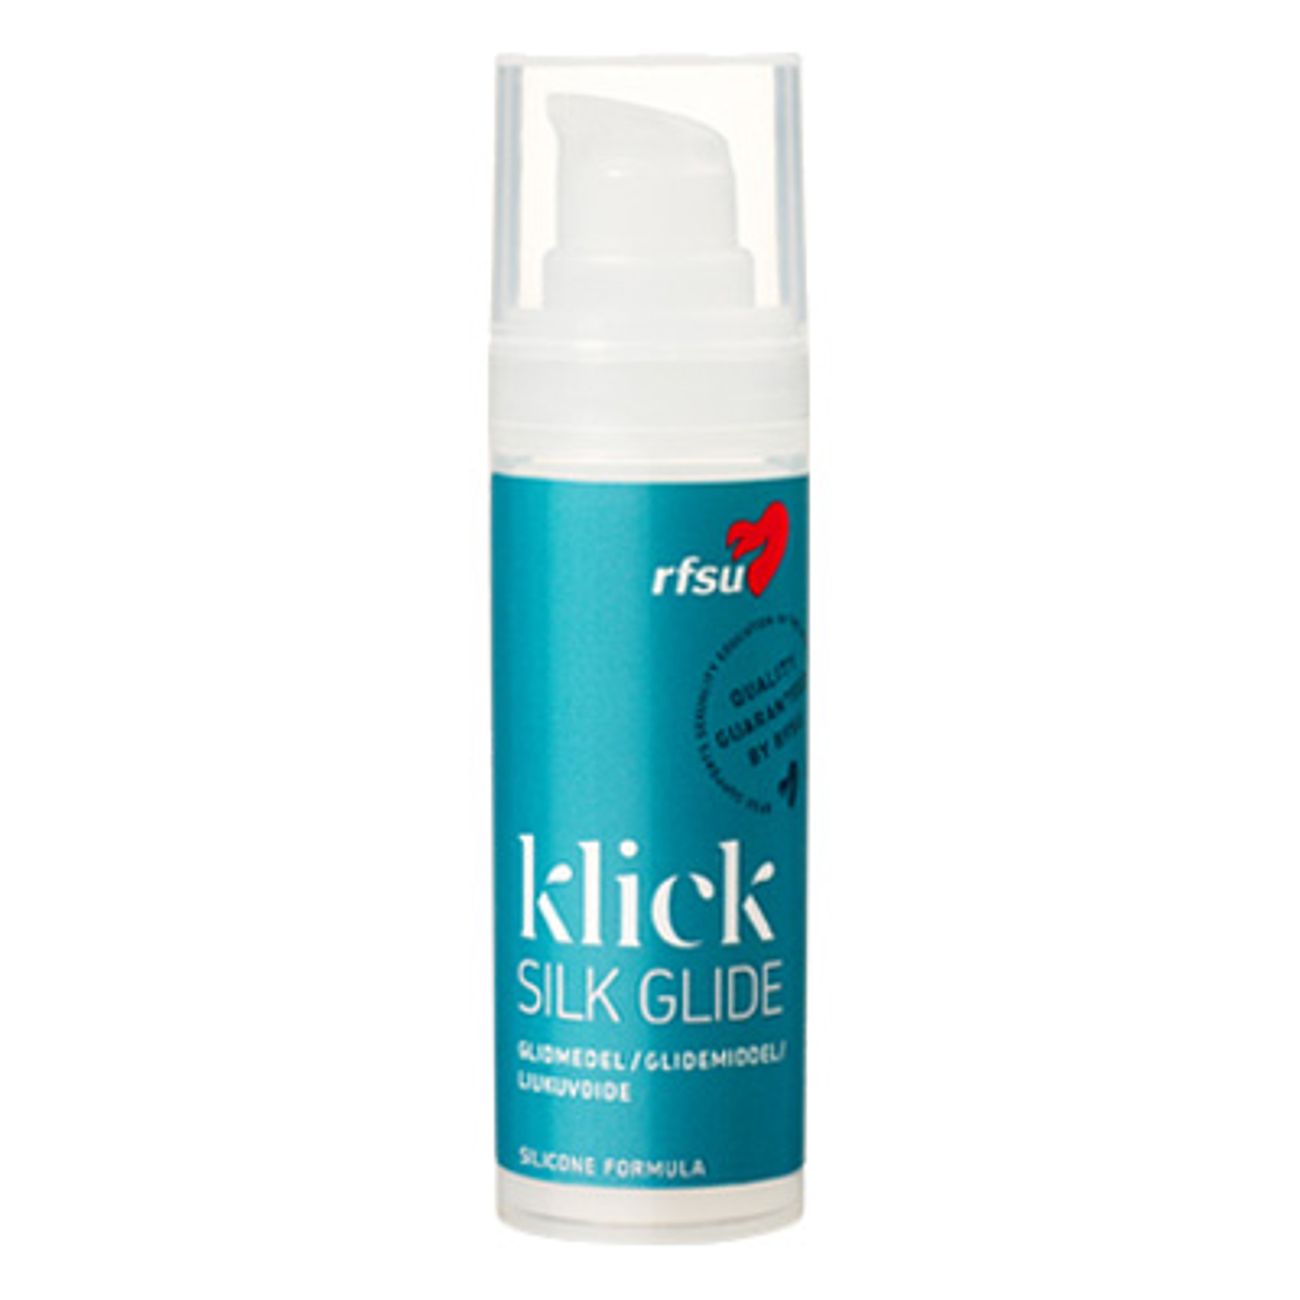 rfsu-klick-silk-glide-1